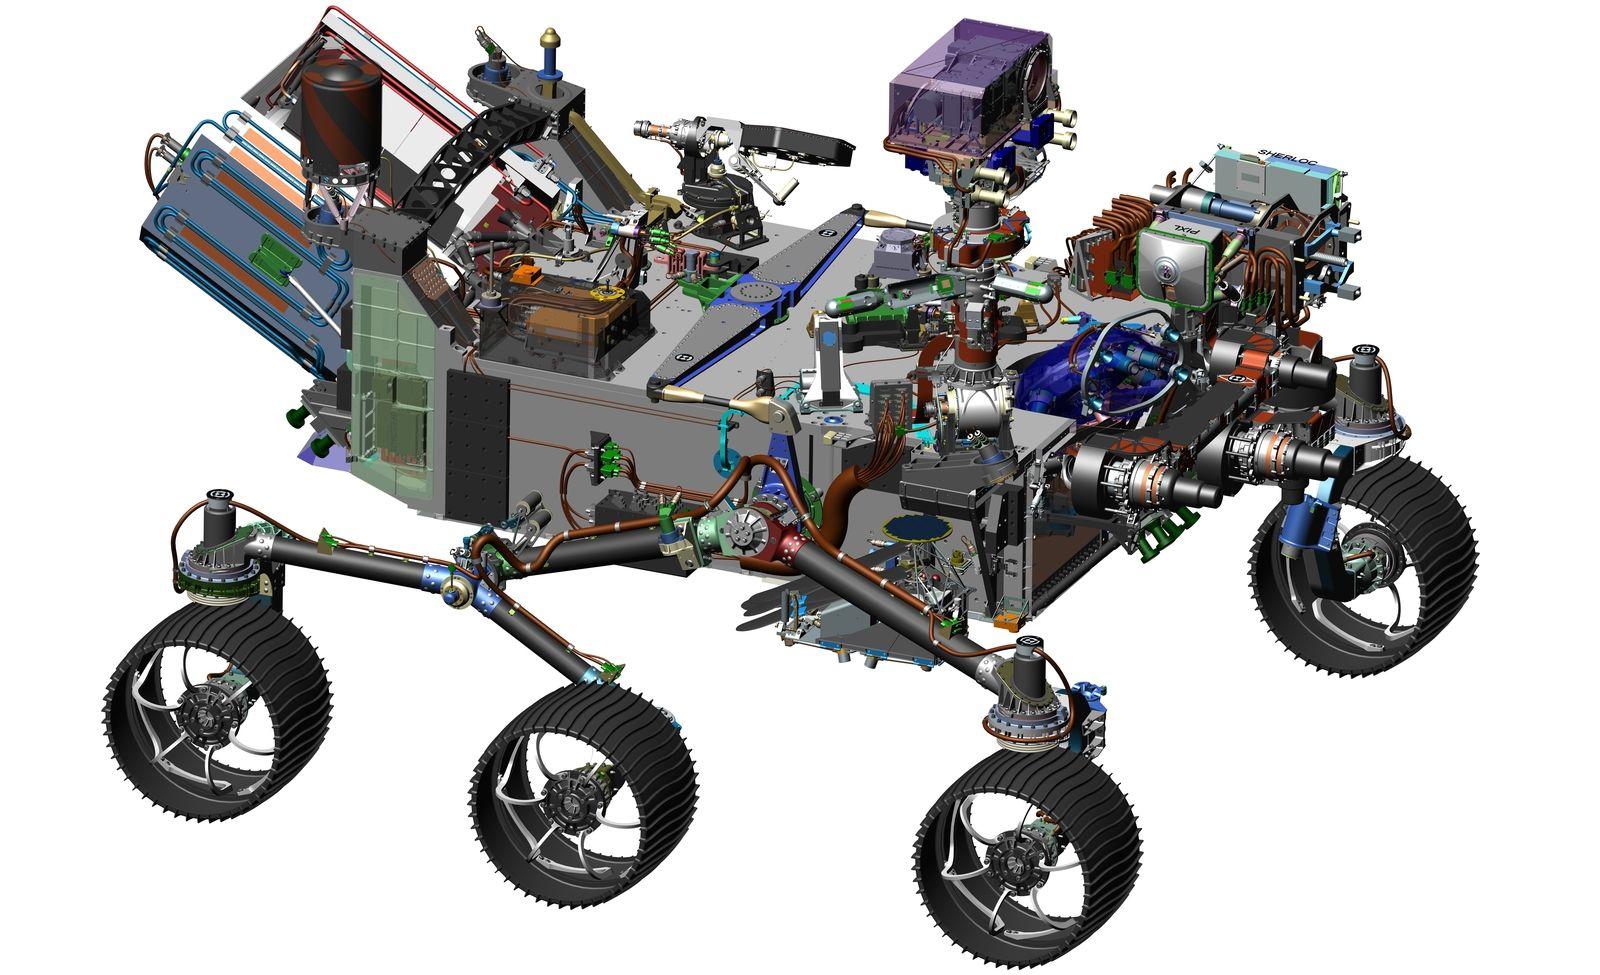 2020 NASA Logo - Computer Design Drawing For NASA's 2020 Mars Rover